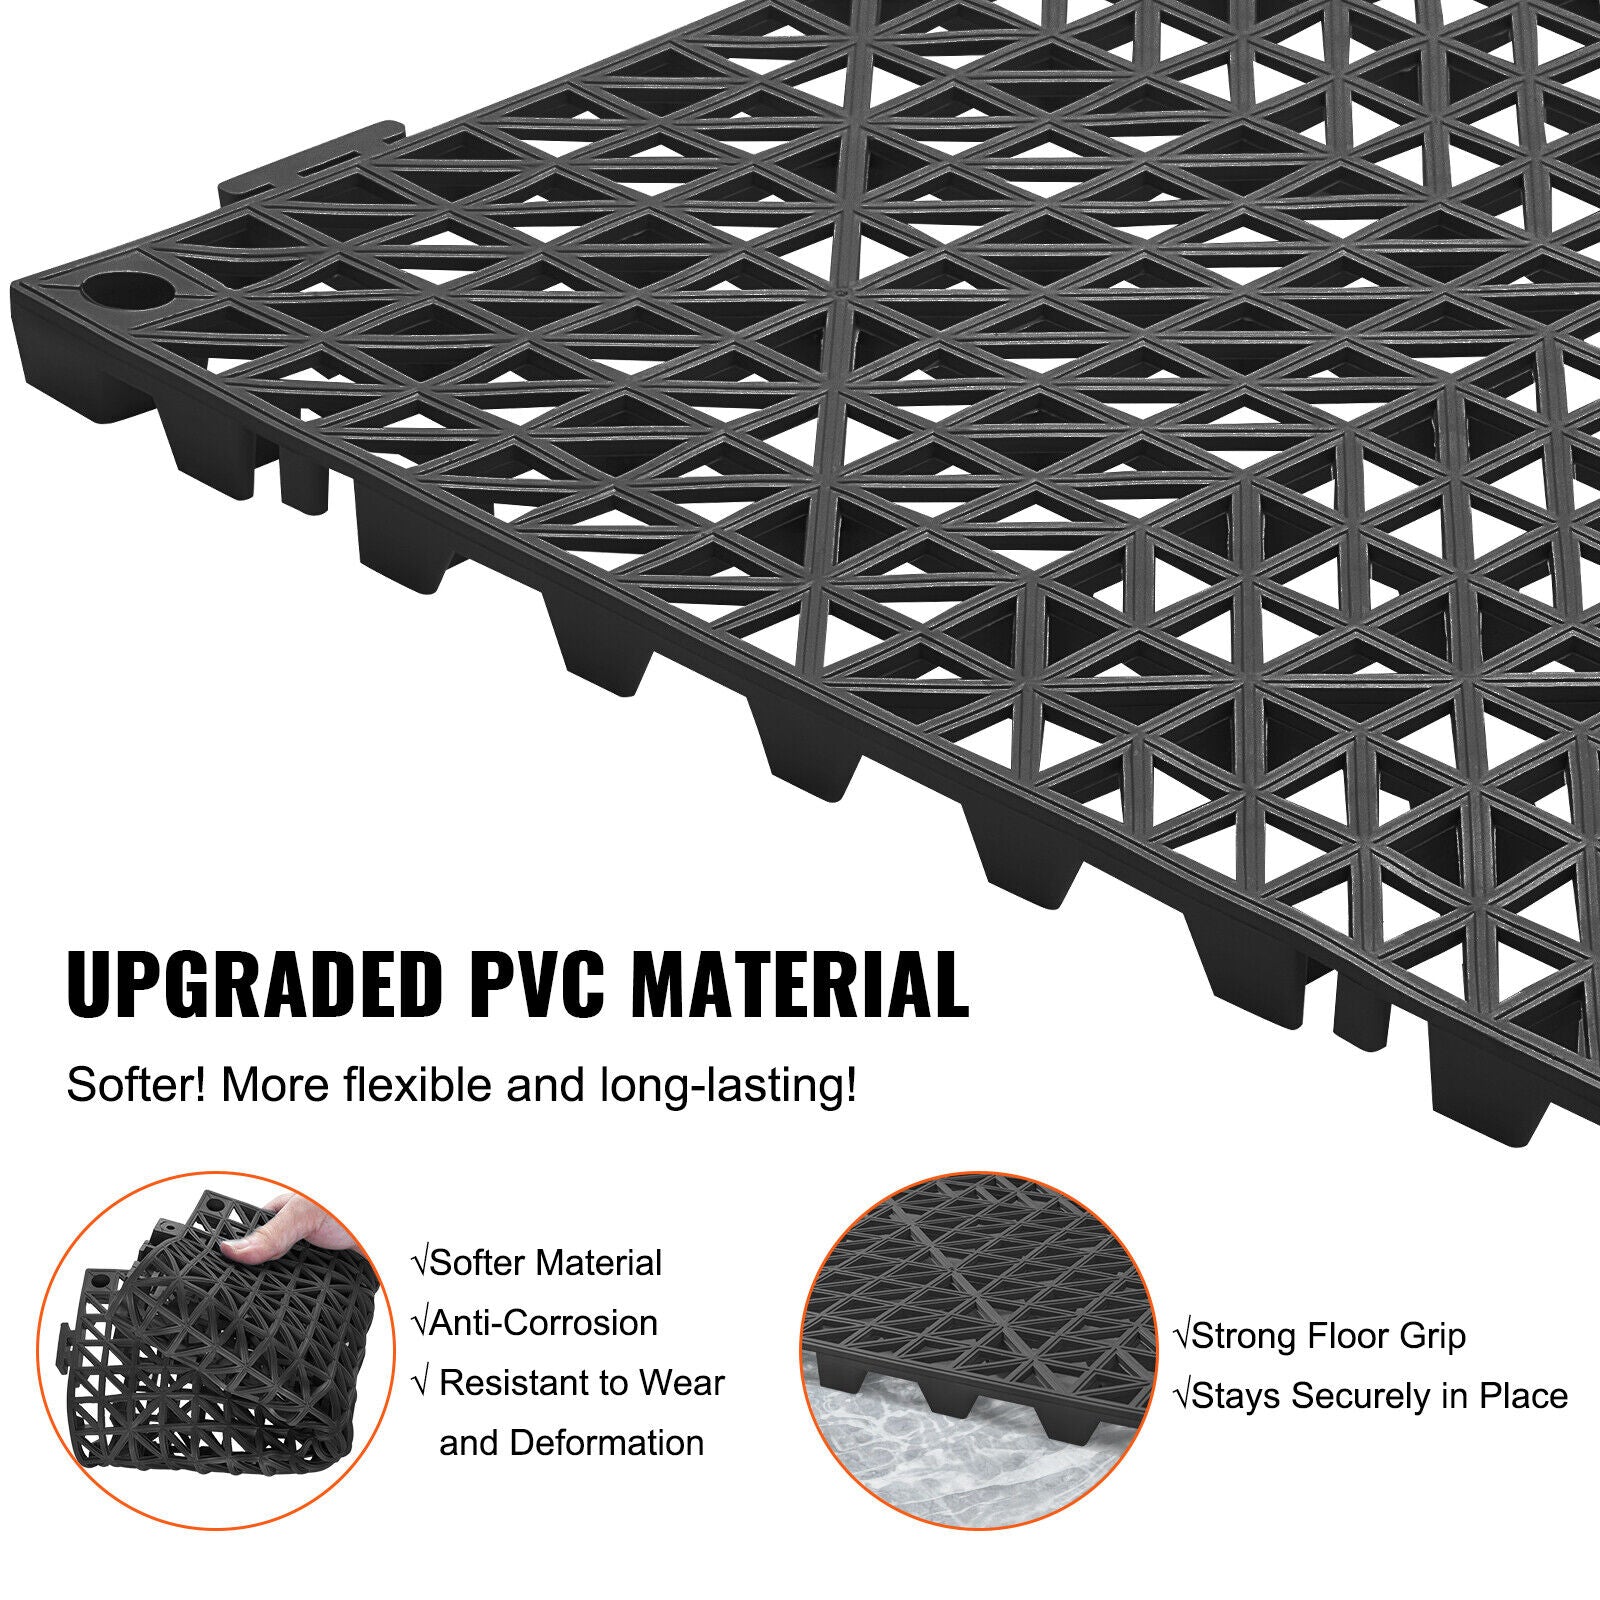 50PCS 12" x 12" PVC Interlocking Drainage Floor Mat Non-Slip Floor Tiles